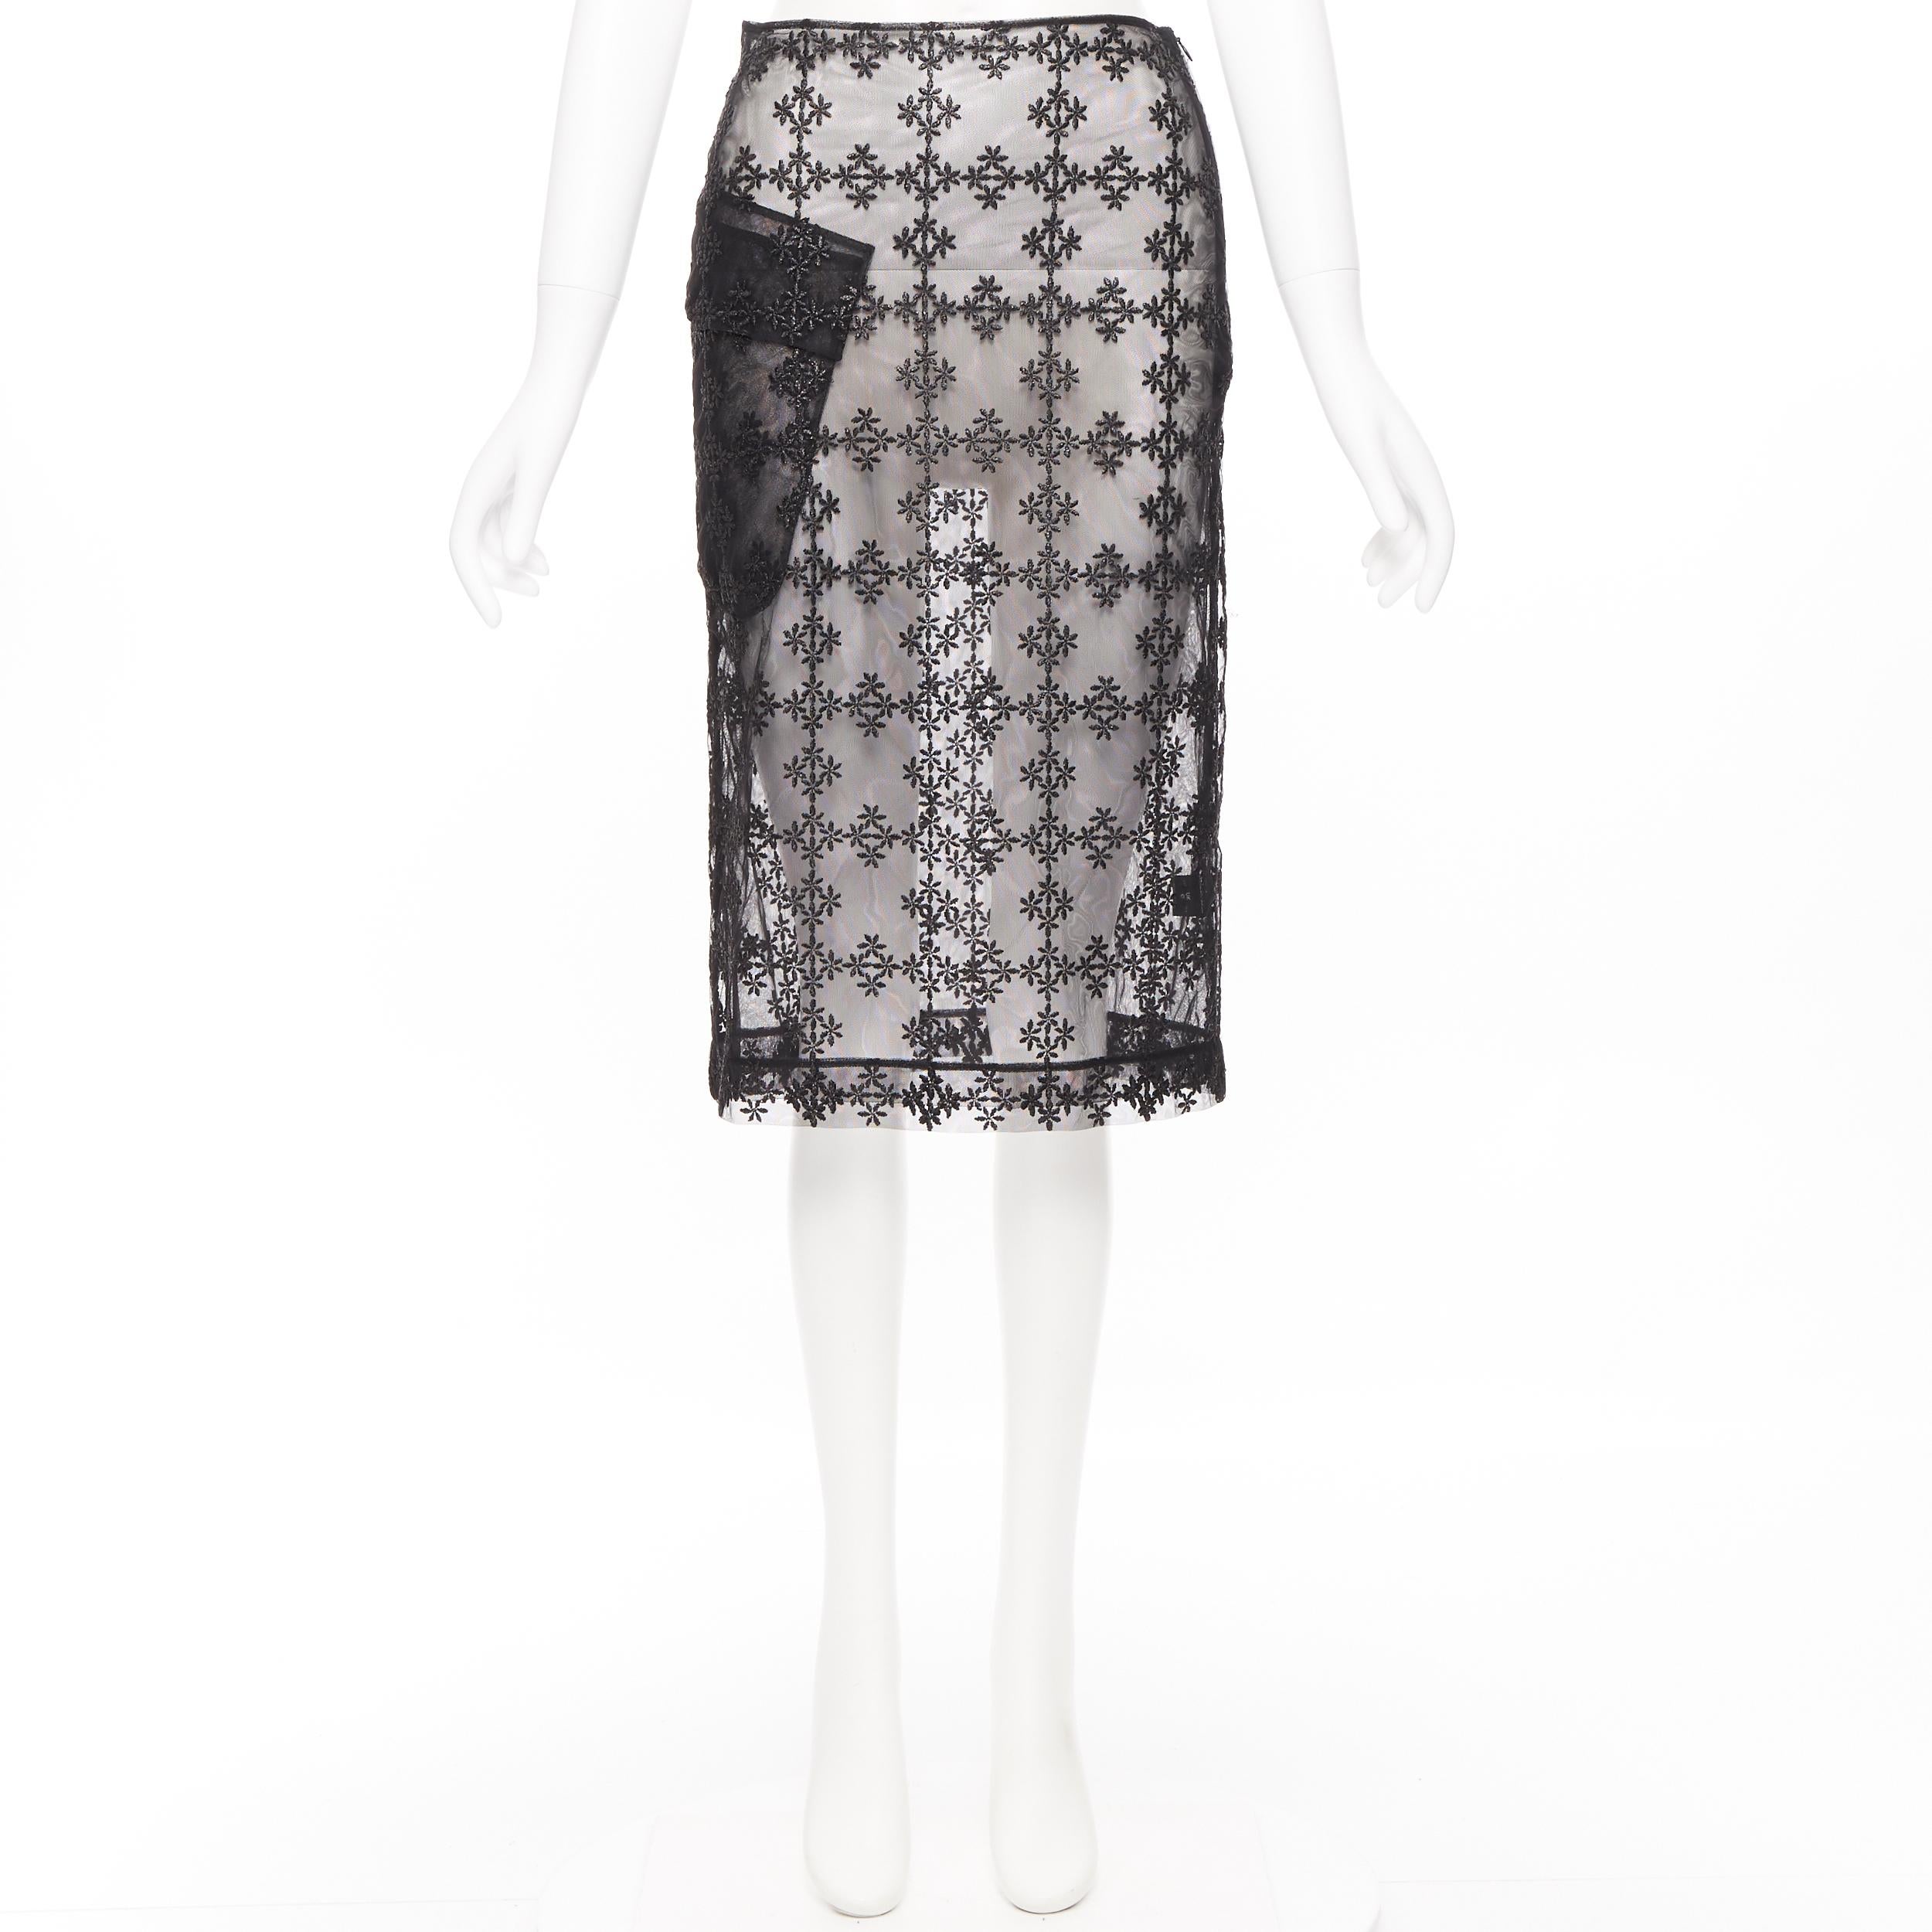 Black SIMONE ROCHA black sheer mesh floral embroidery patch pocket pencil skirt XS